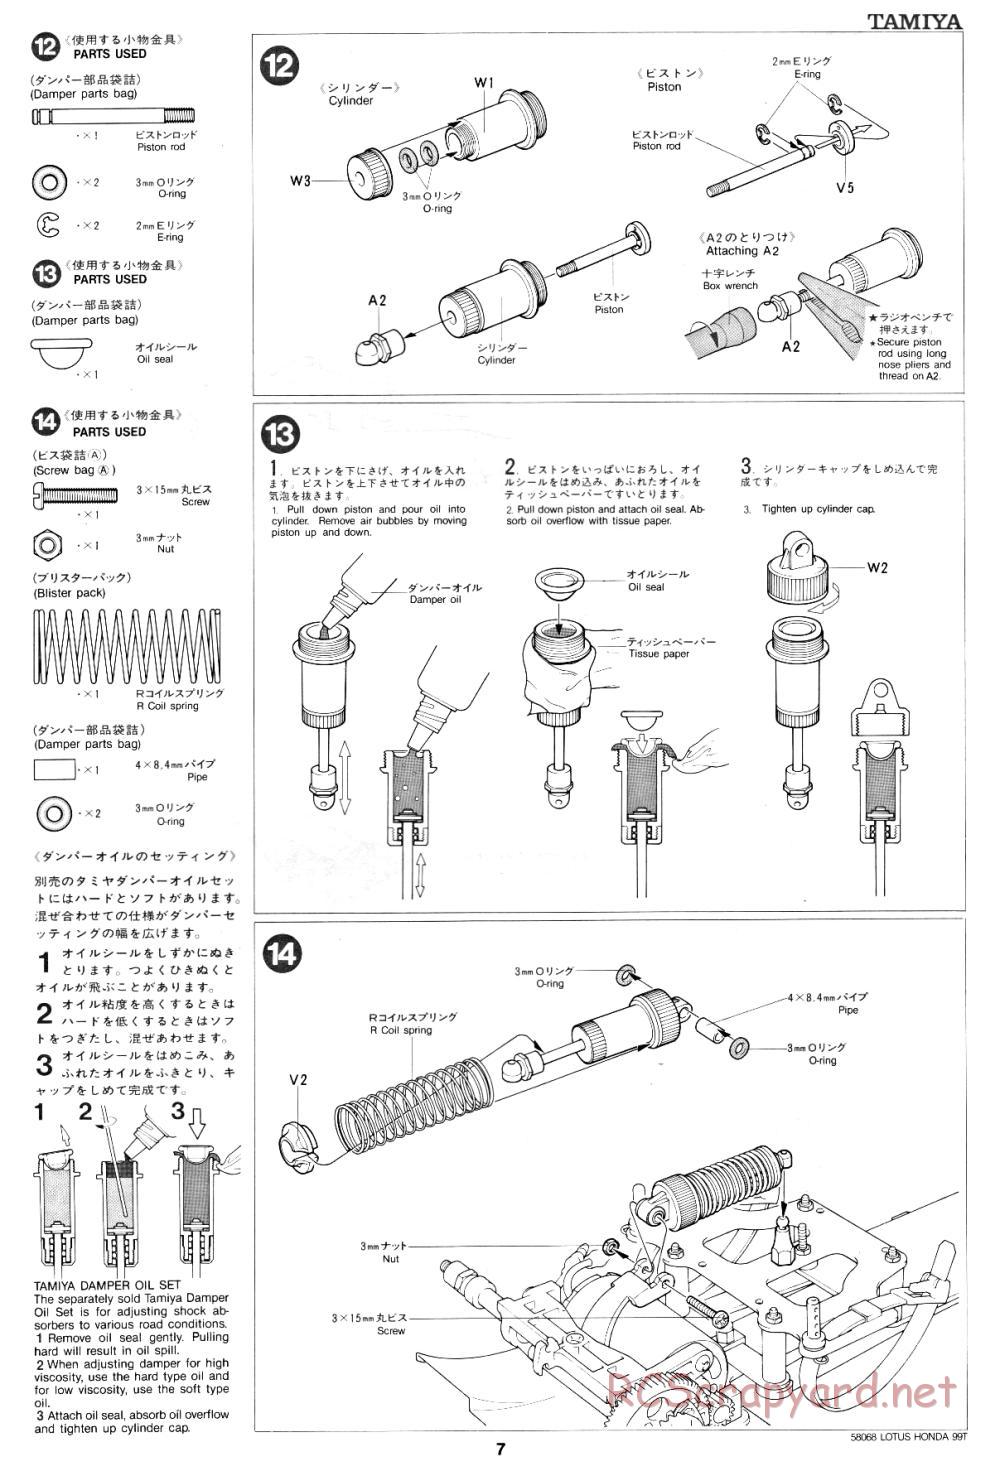 Tamiya - Lotus Honda 99T - 58068 - Manual - Page 7